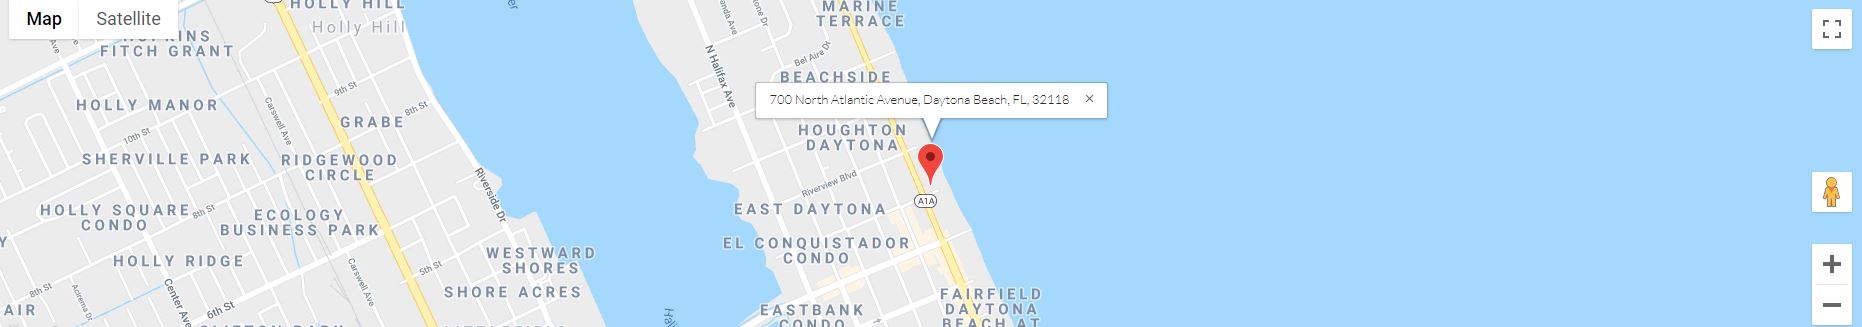 map with pin on 700 N Atlantic Ave, Daytona Beach, FL 32118 